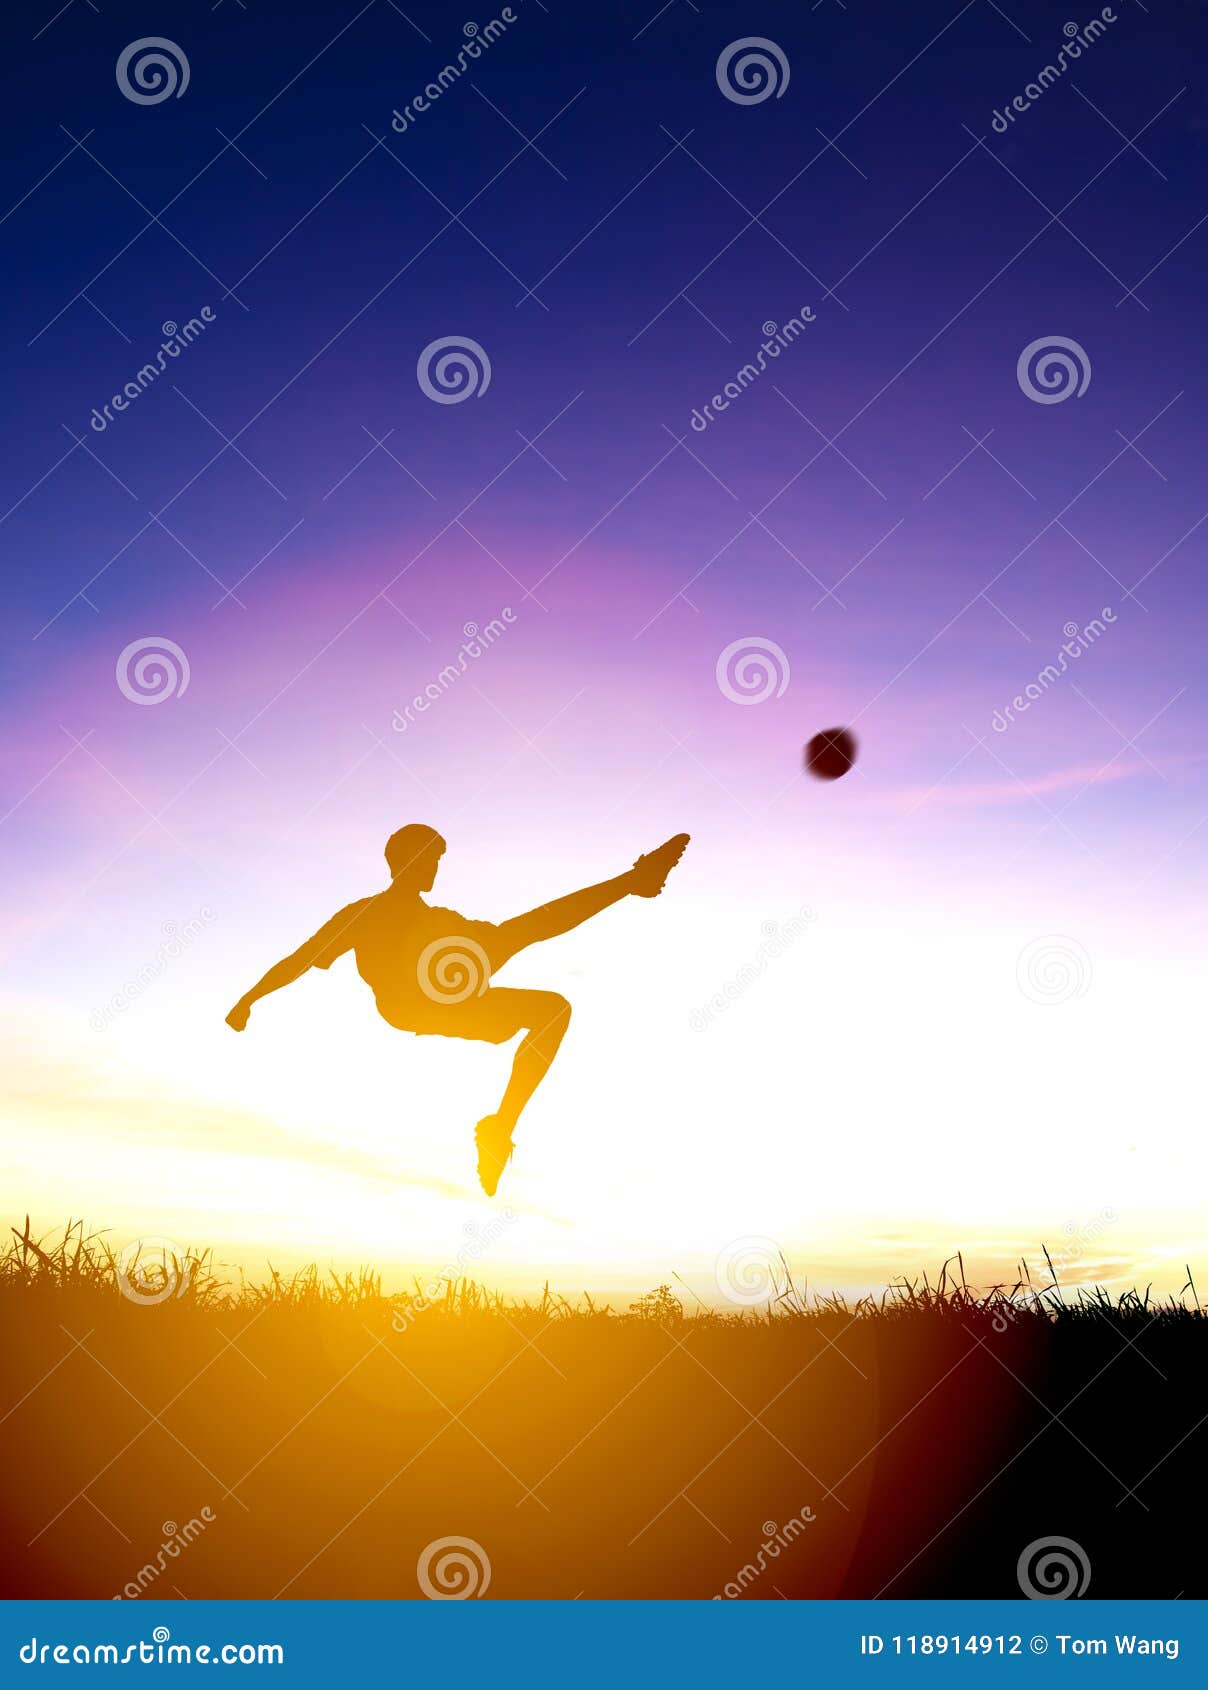 silhouette of soccer player kicks ball